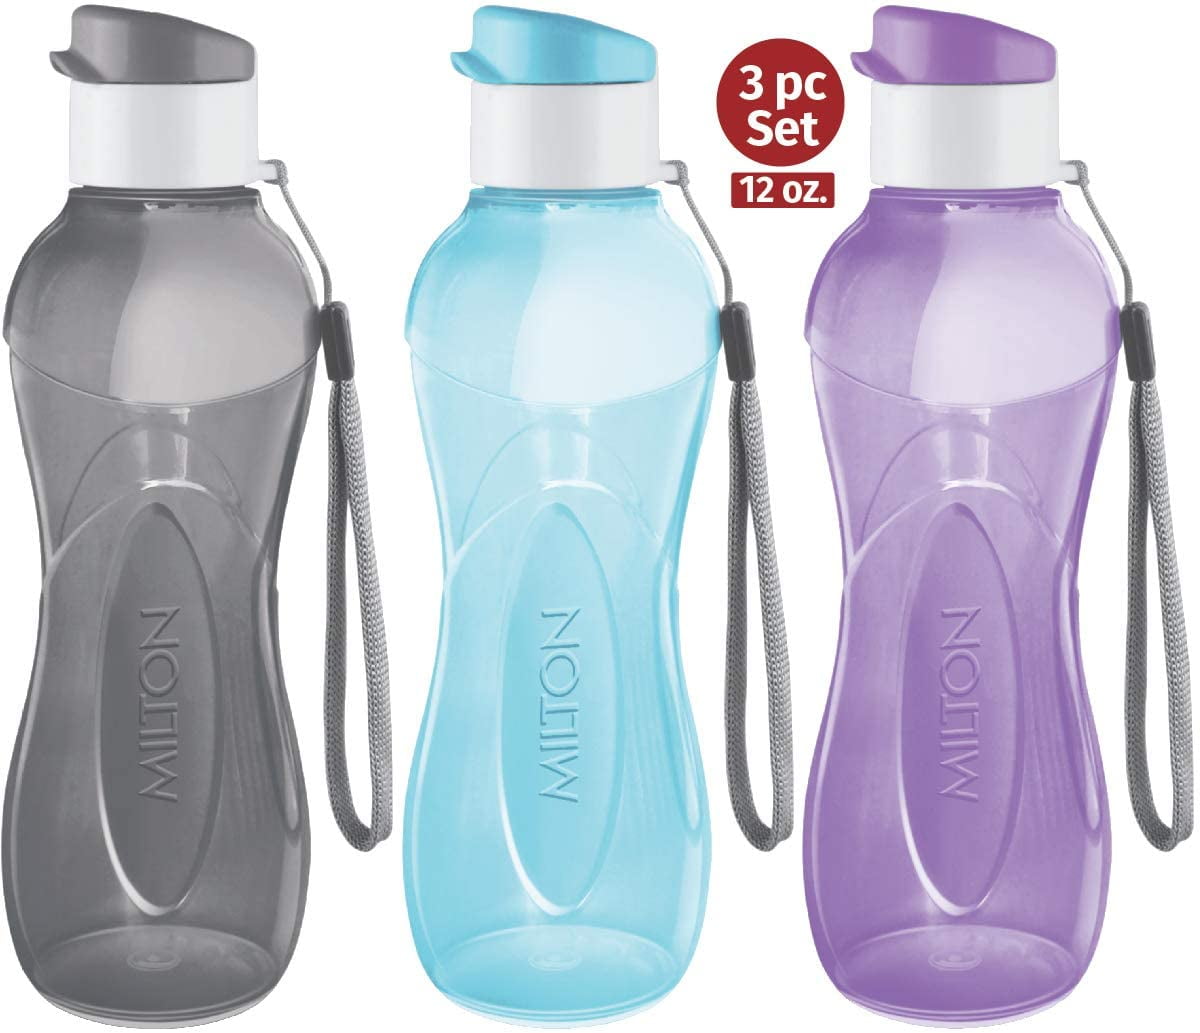 MILTON 6-Pc Reusable Water Bottles Bulk Pack 12 Oz Plastic Bottles with  Caps, Blue